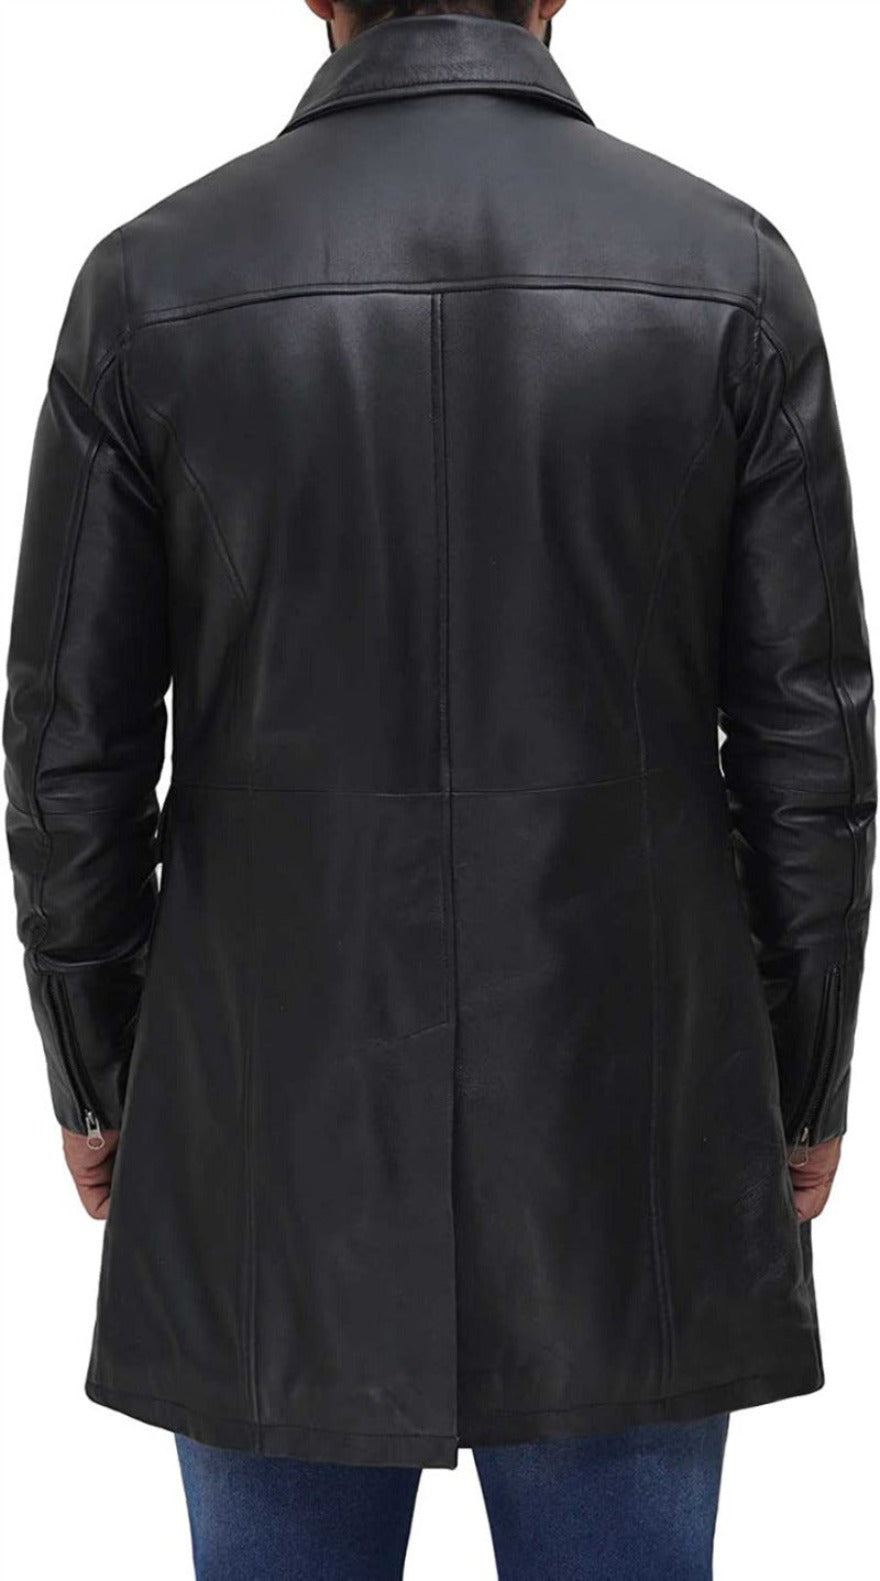 Mens three quarter length black leather coat, back view 